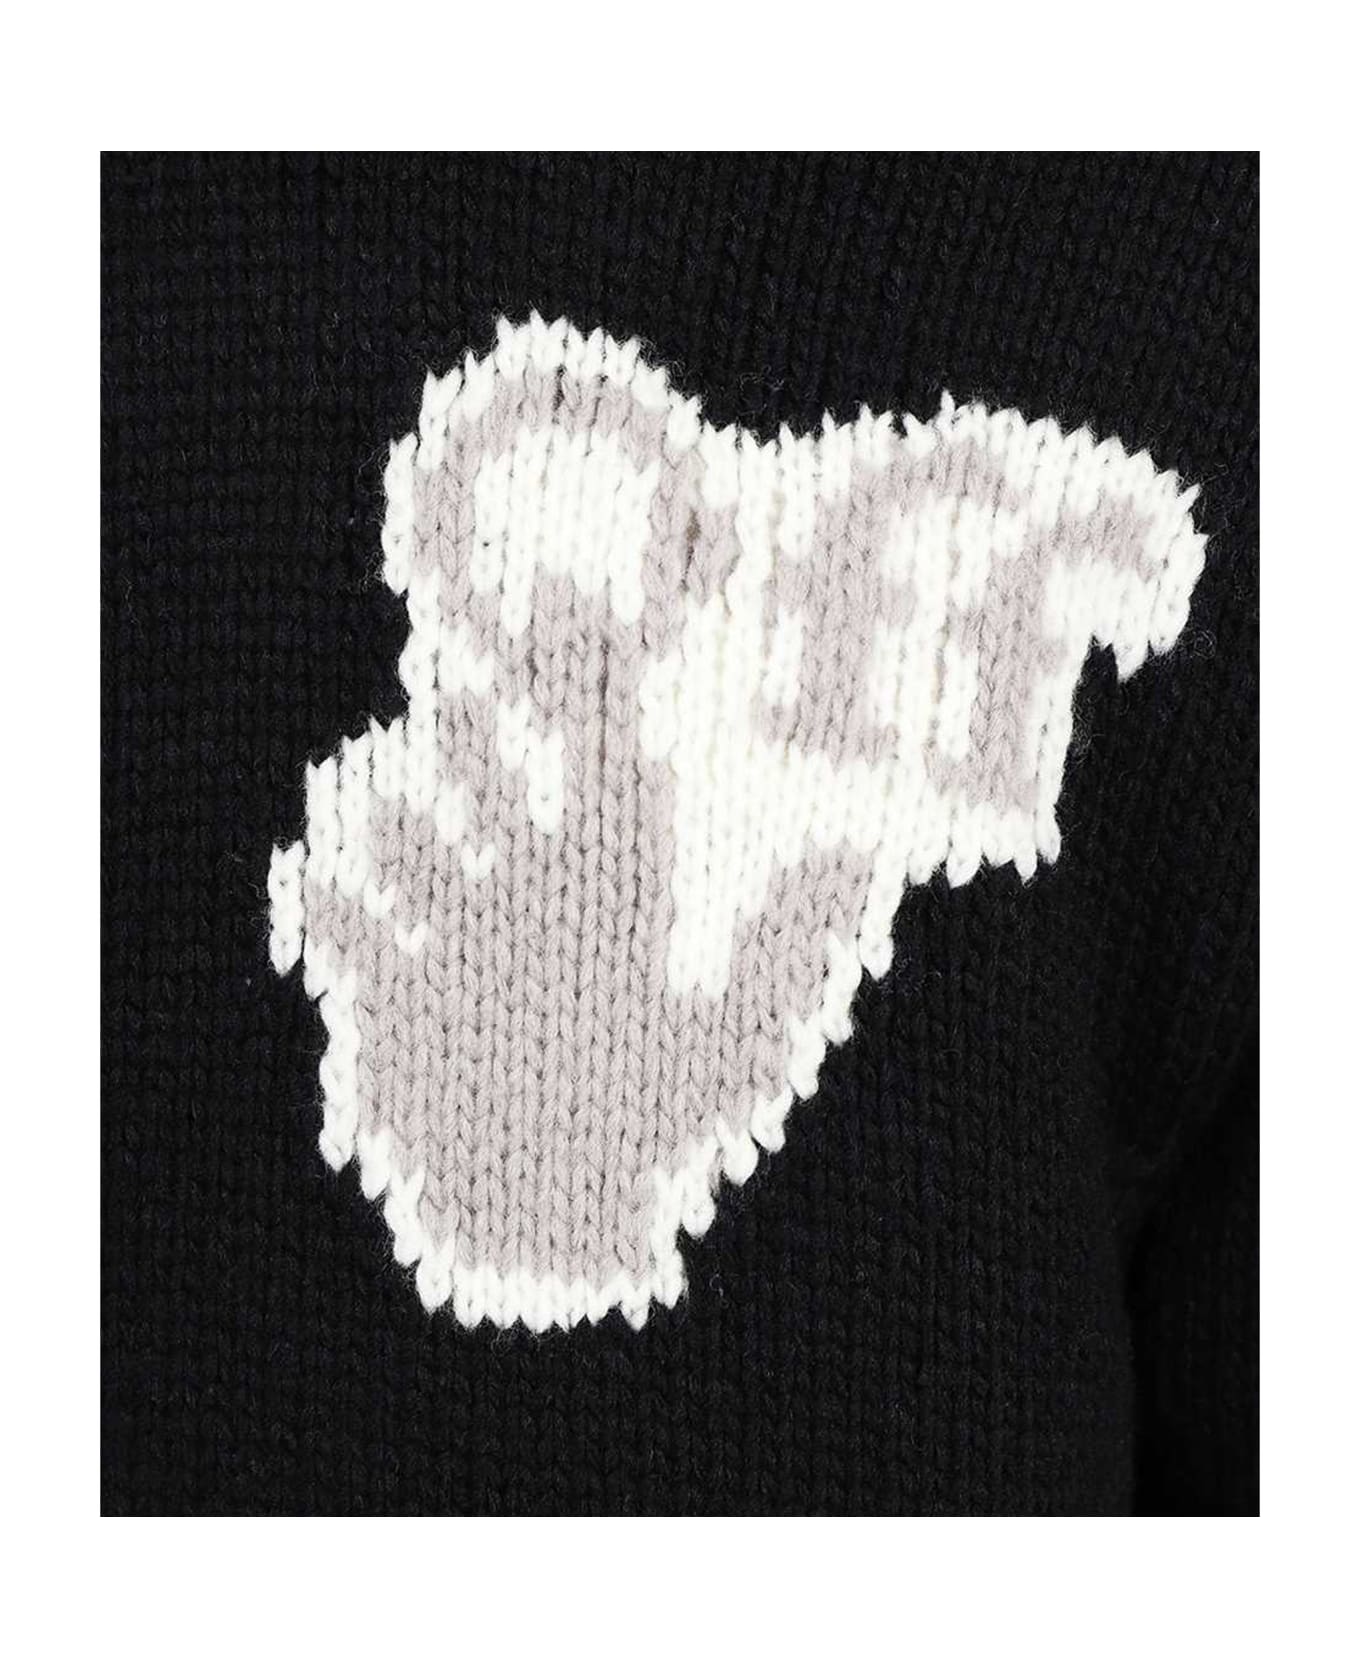 Off-White Knitted Hooded Sweatshirt - Black フリース